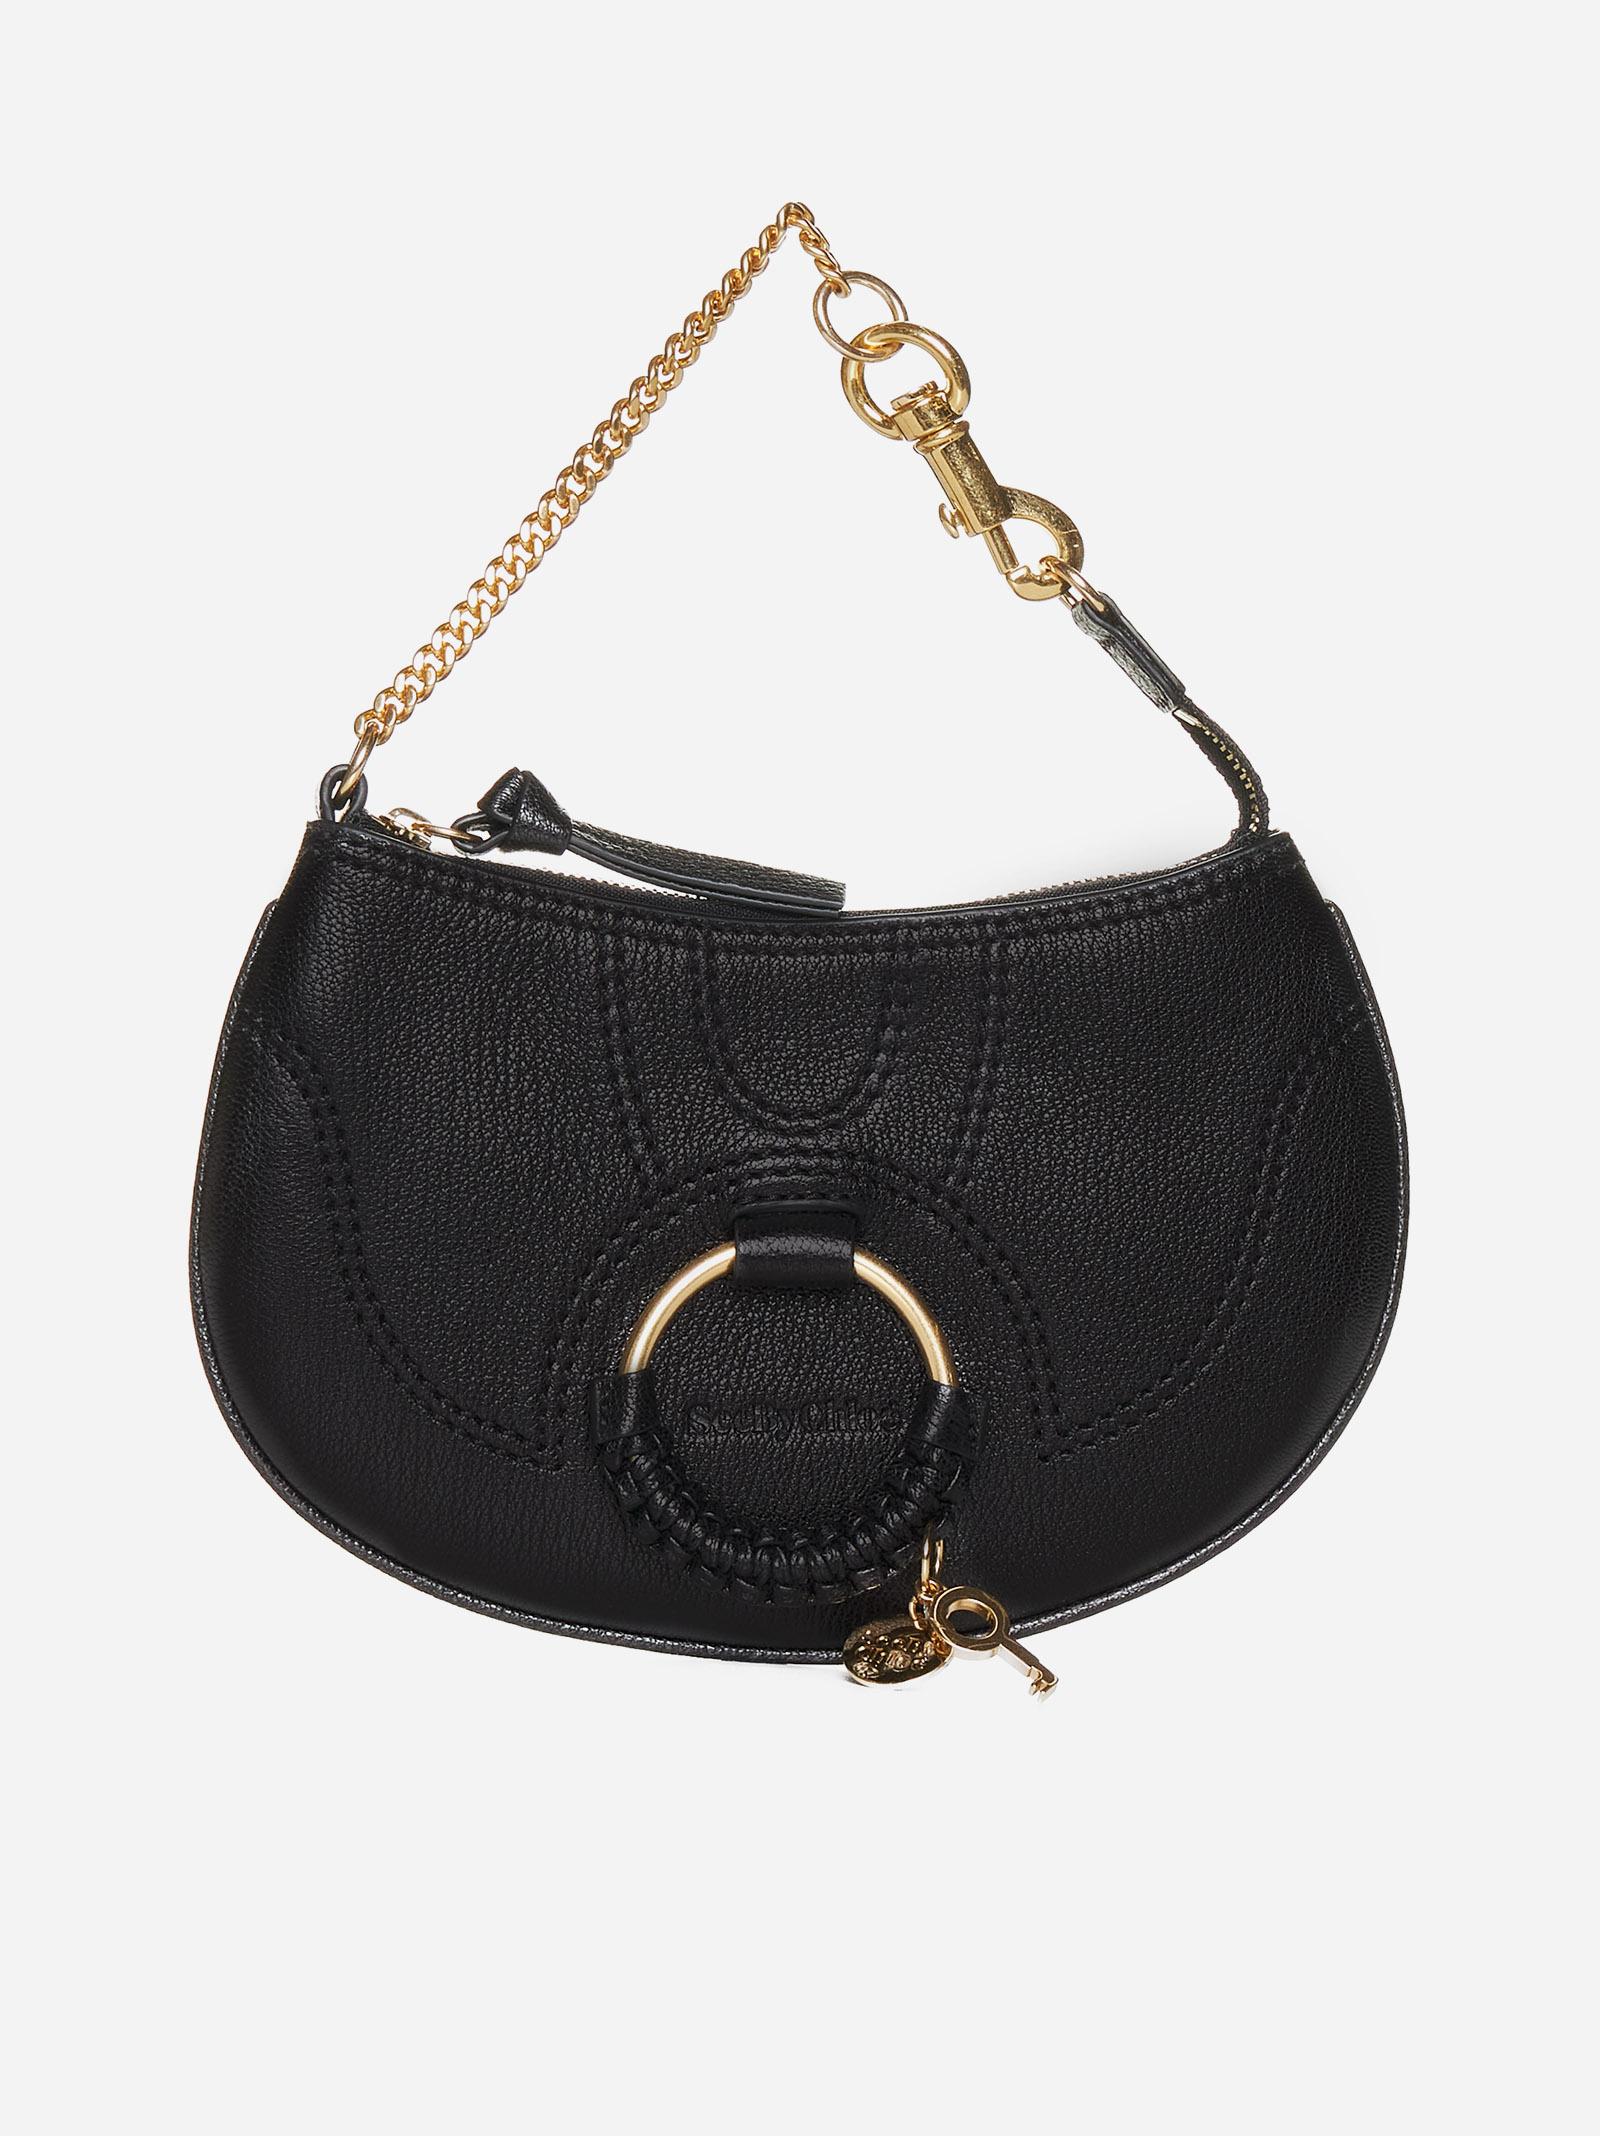 See By Chloé Hana Leather Shoulder Bag in Black | Lyst